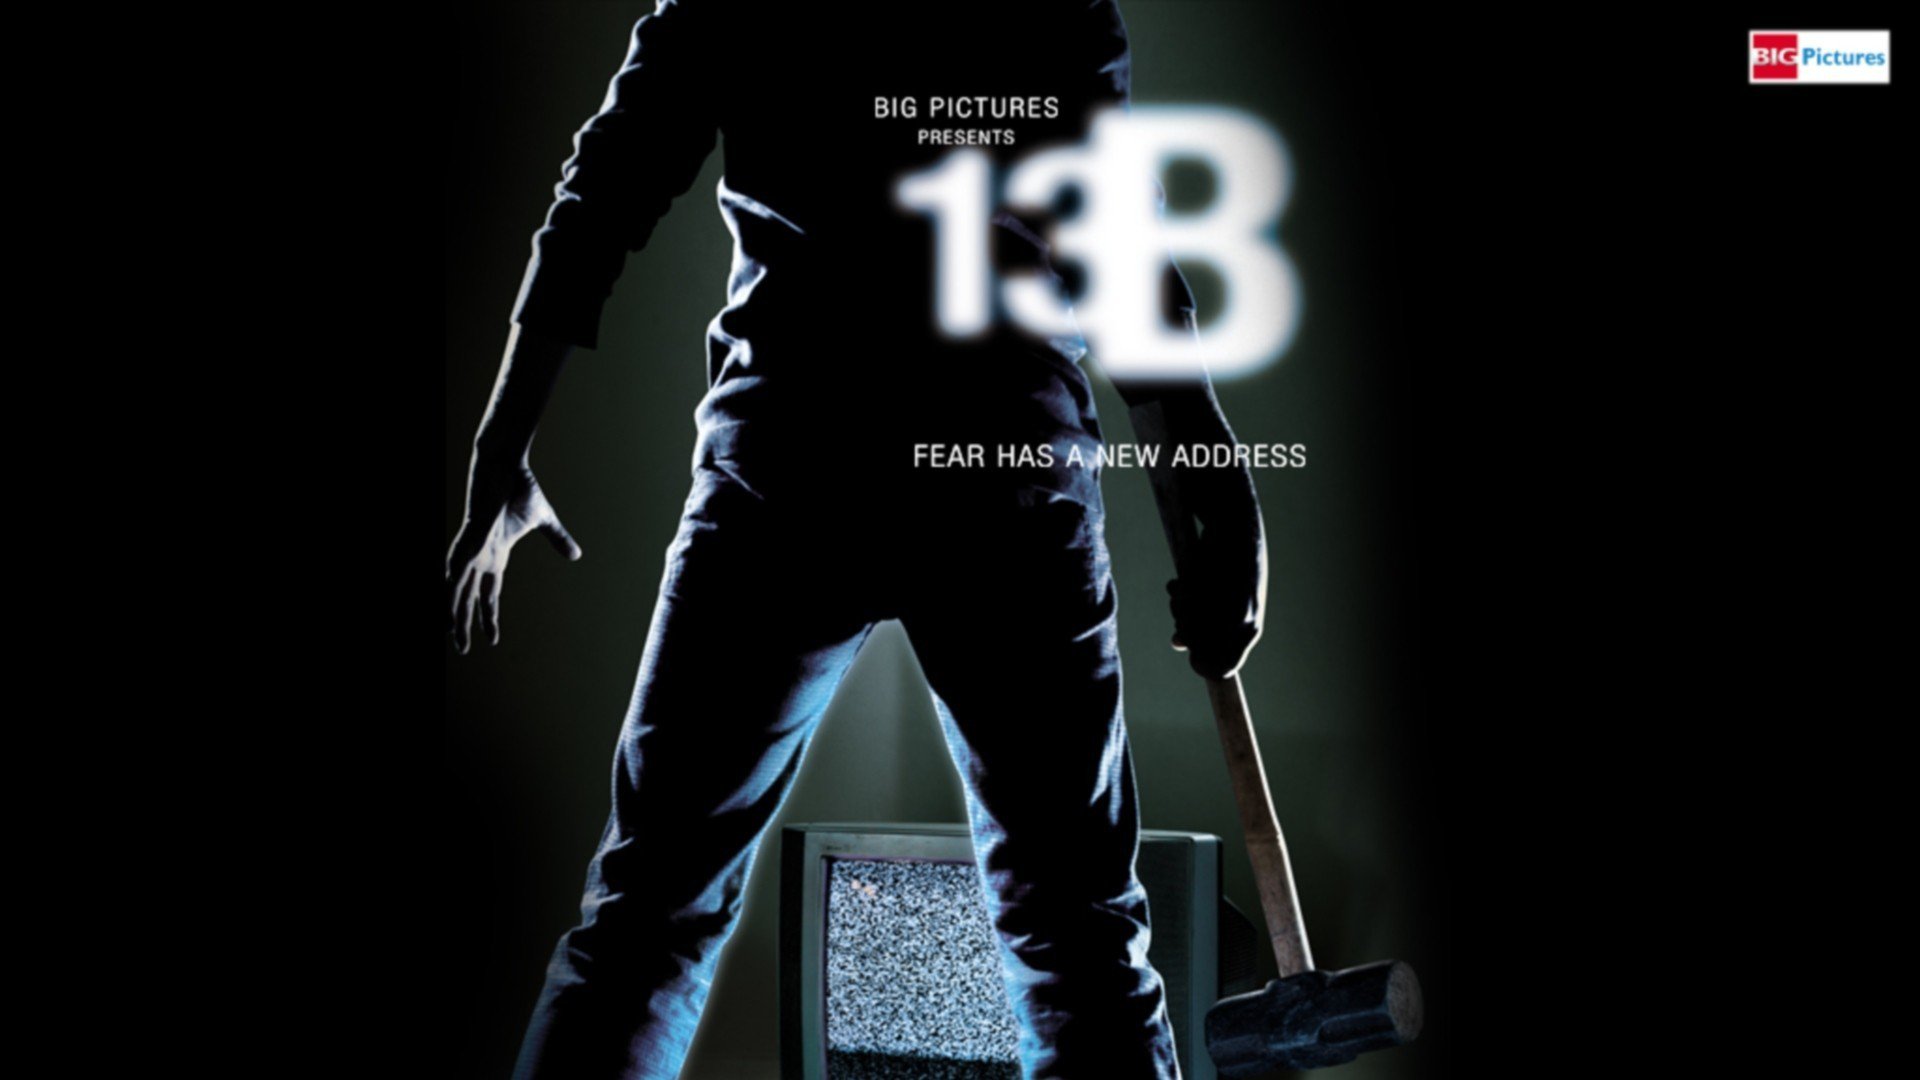 13B: Fear Has a New Address